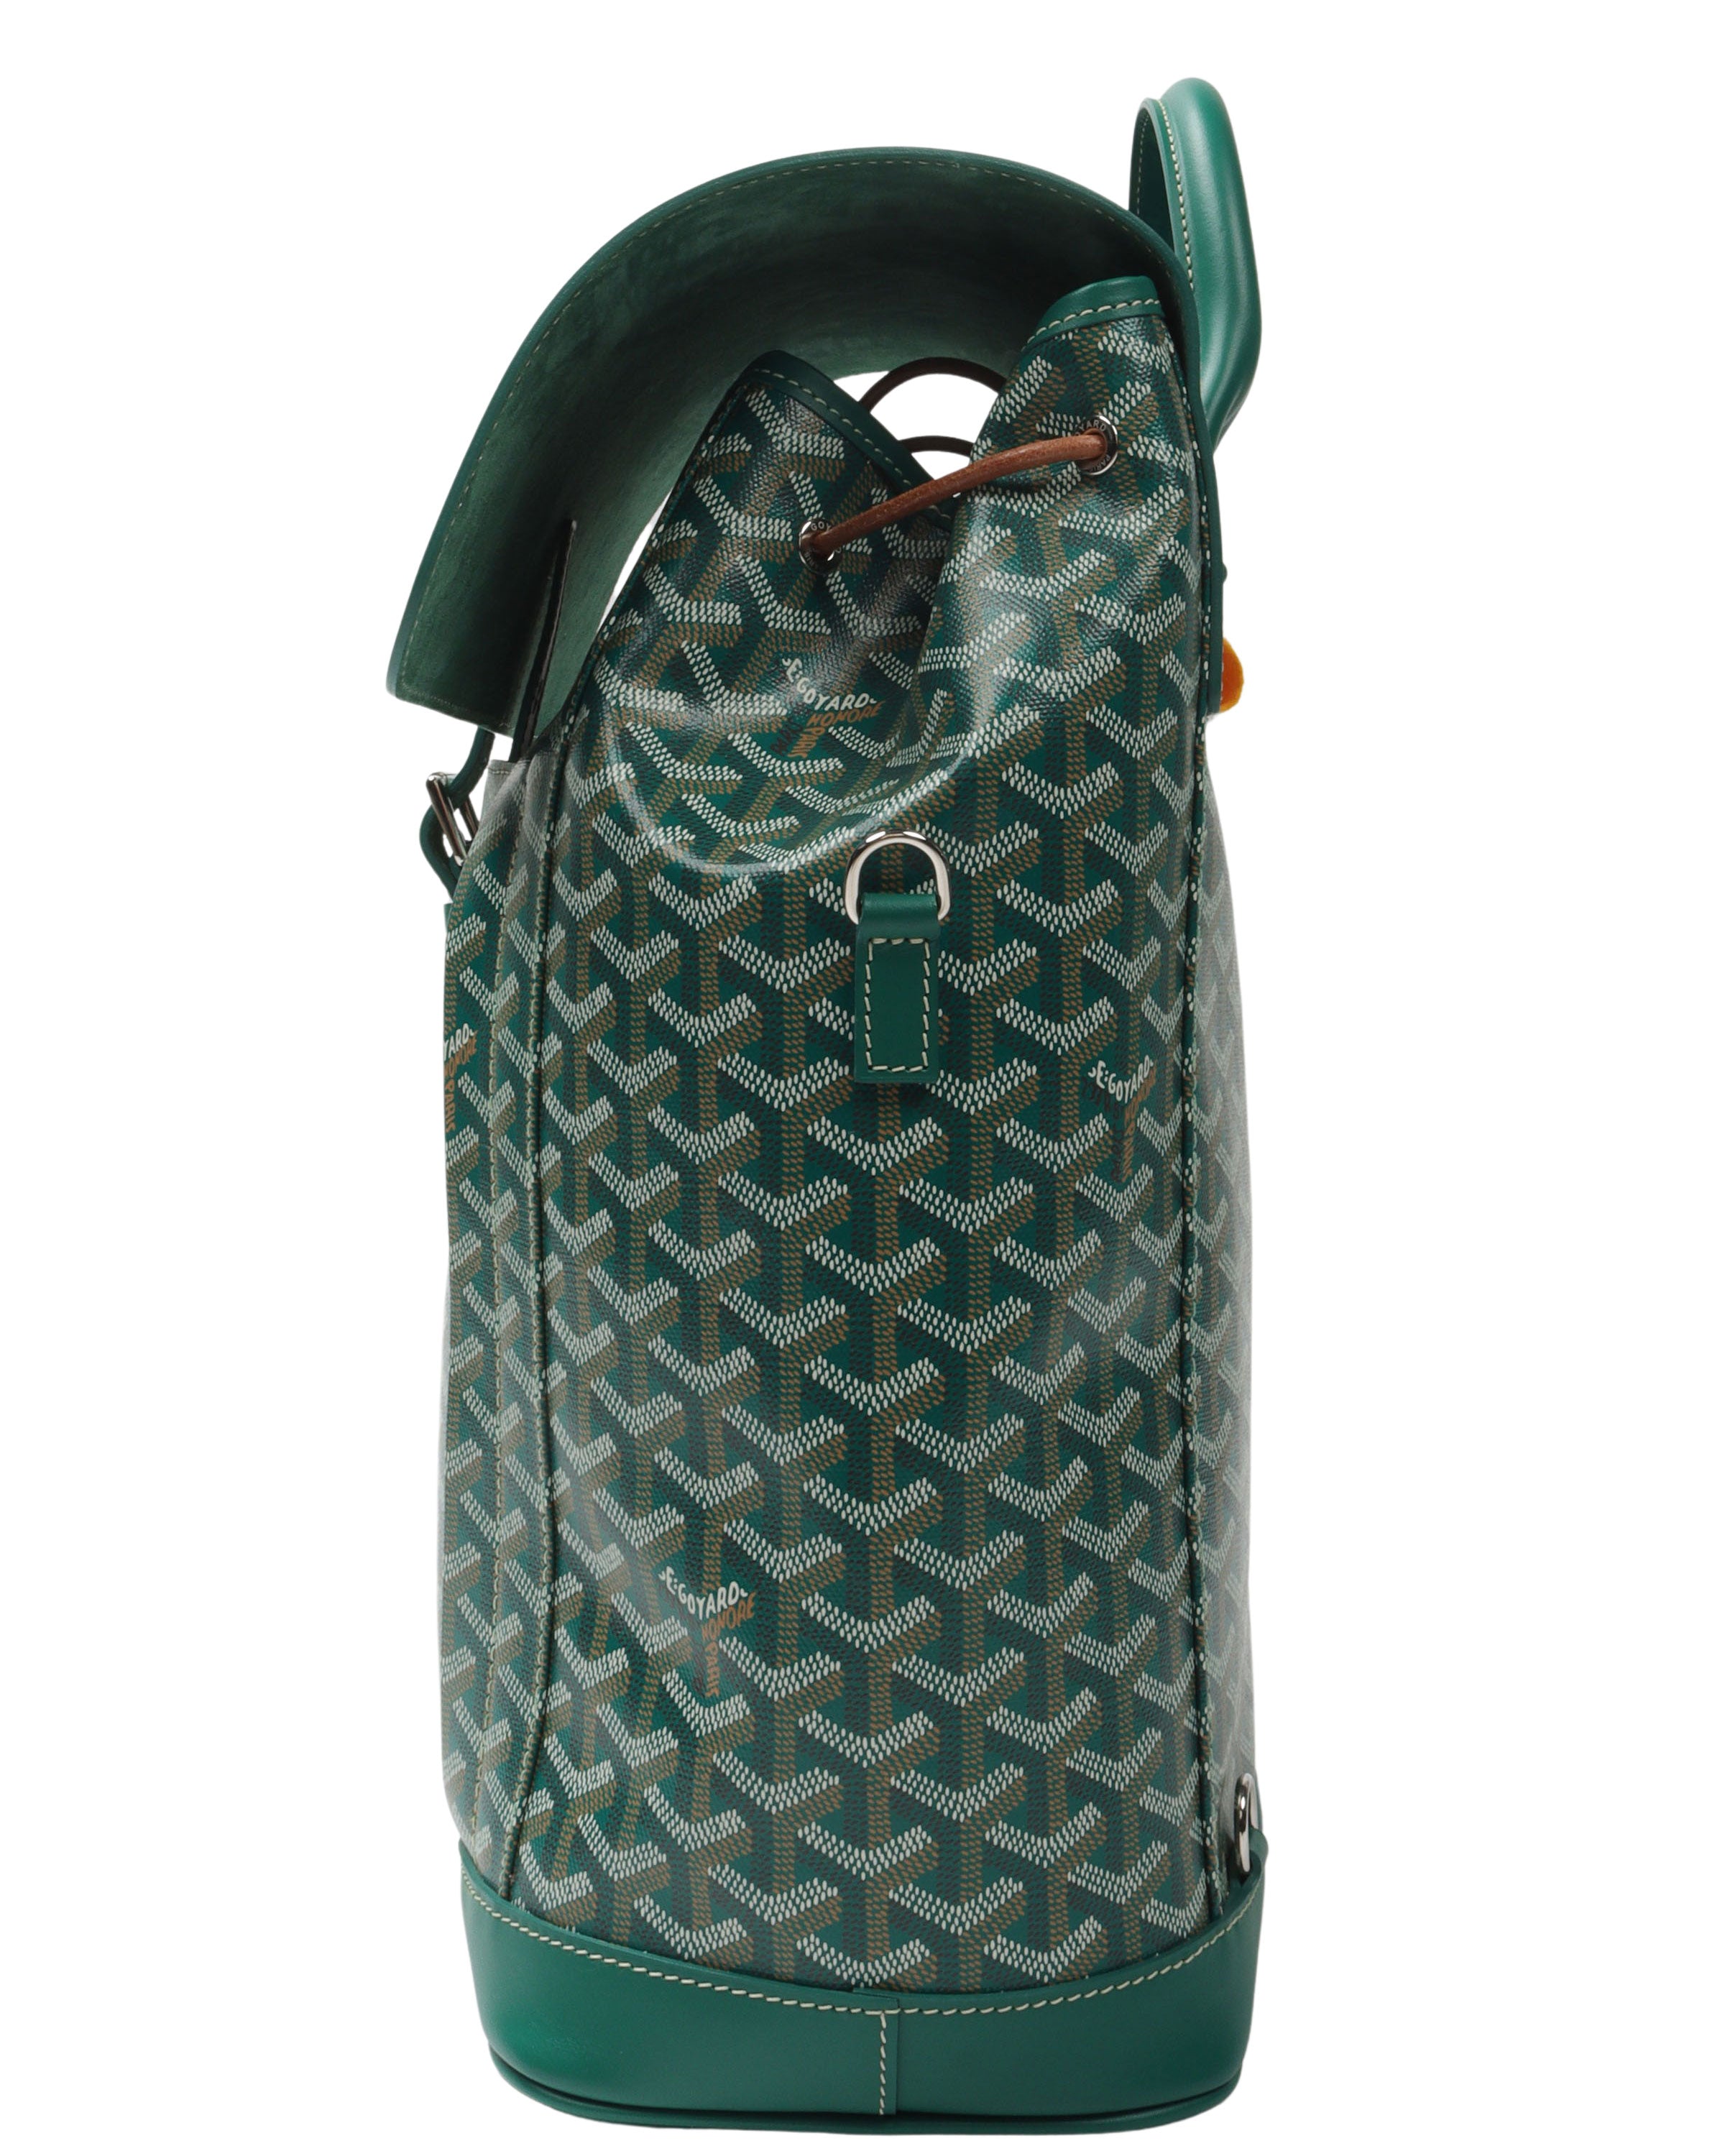 GOYARD Alpin MM Backpack  Luxury handbags, Leather, Backpacks